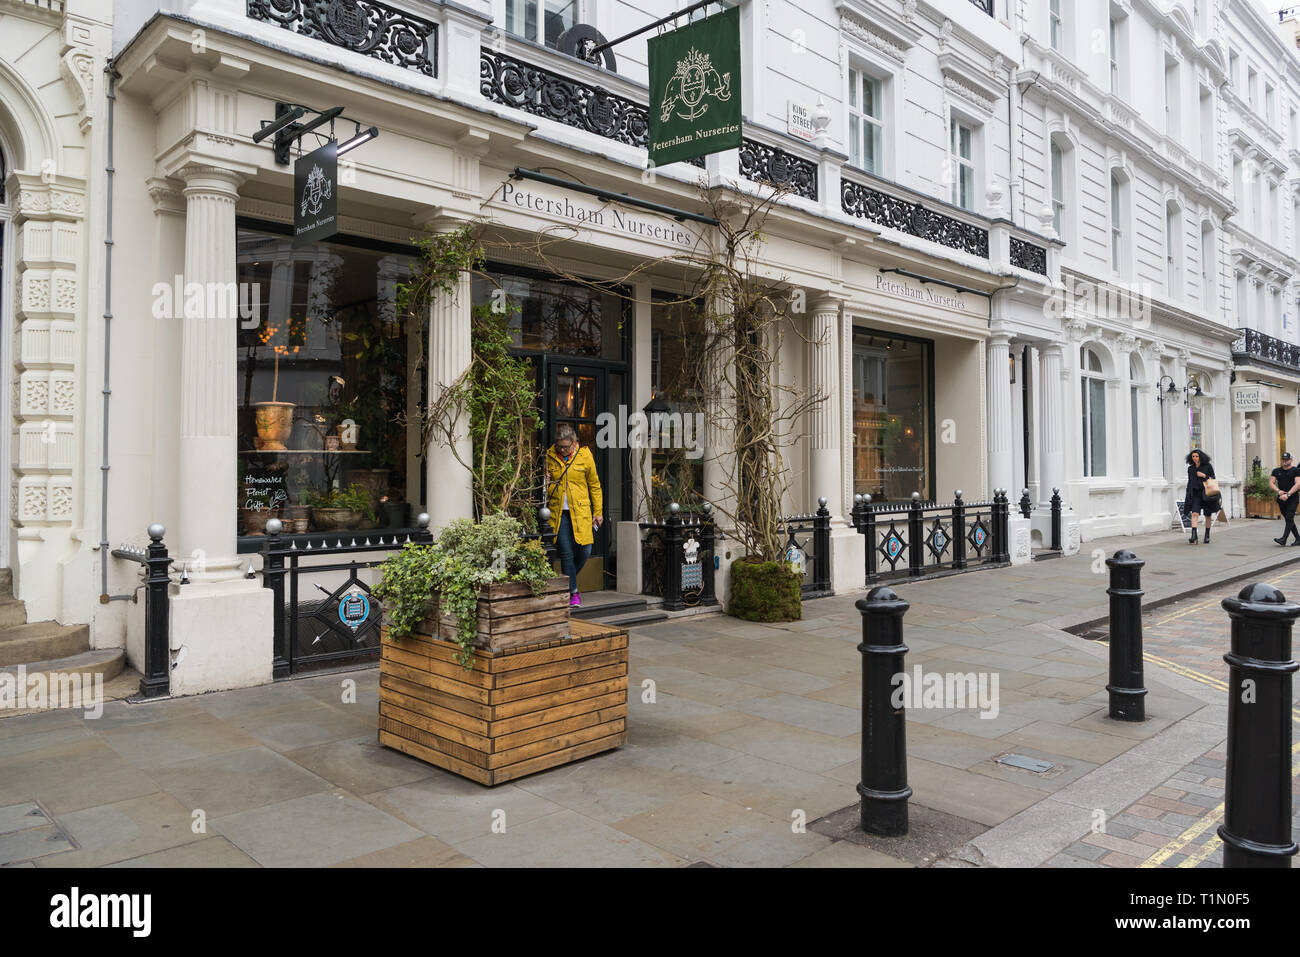 Petersham Nurseries shop front in King Street, Covent Garden, London, England, UK Stock Photo